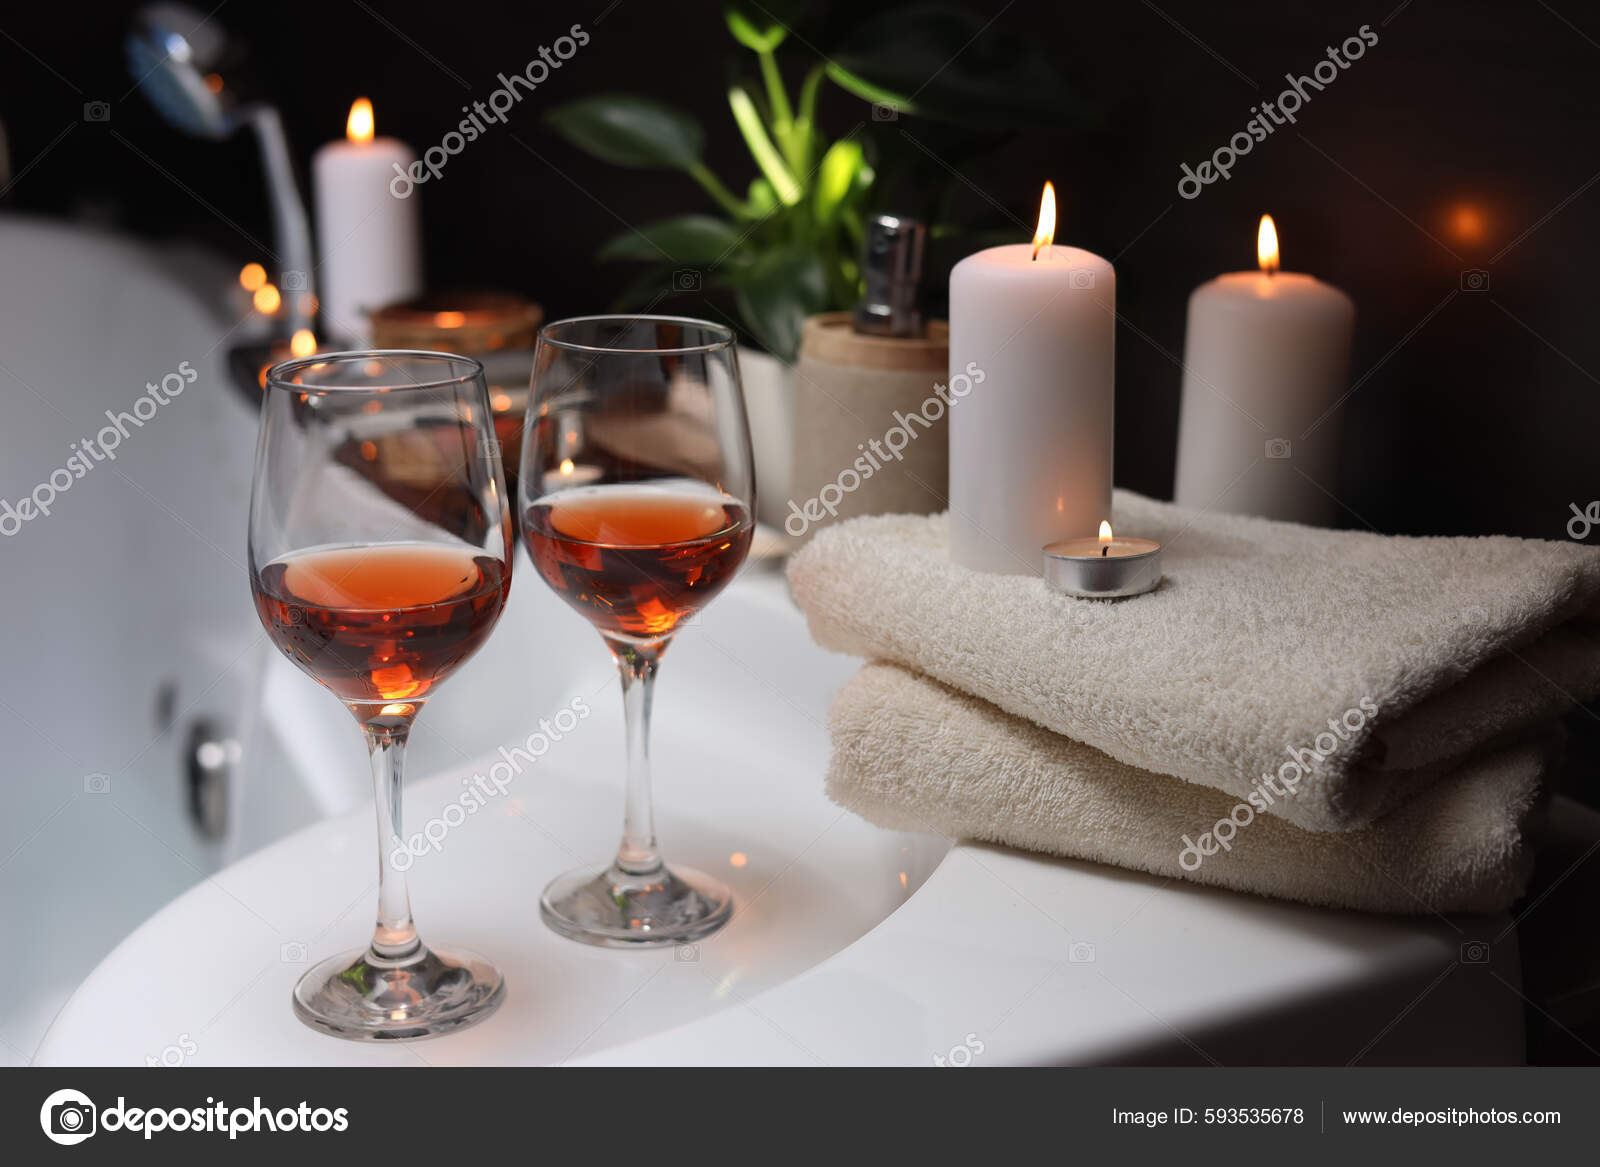 https://st.depositphotos.com/16122460/59353/i/1600/depositphotos_593535678-stock-photo-bathtub-glasses-wine-candles-indoors.jpg